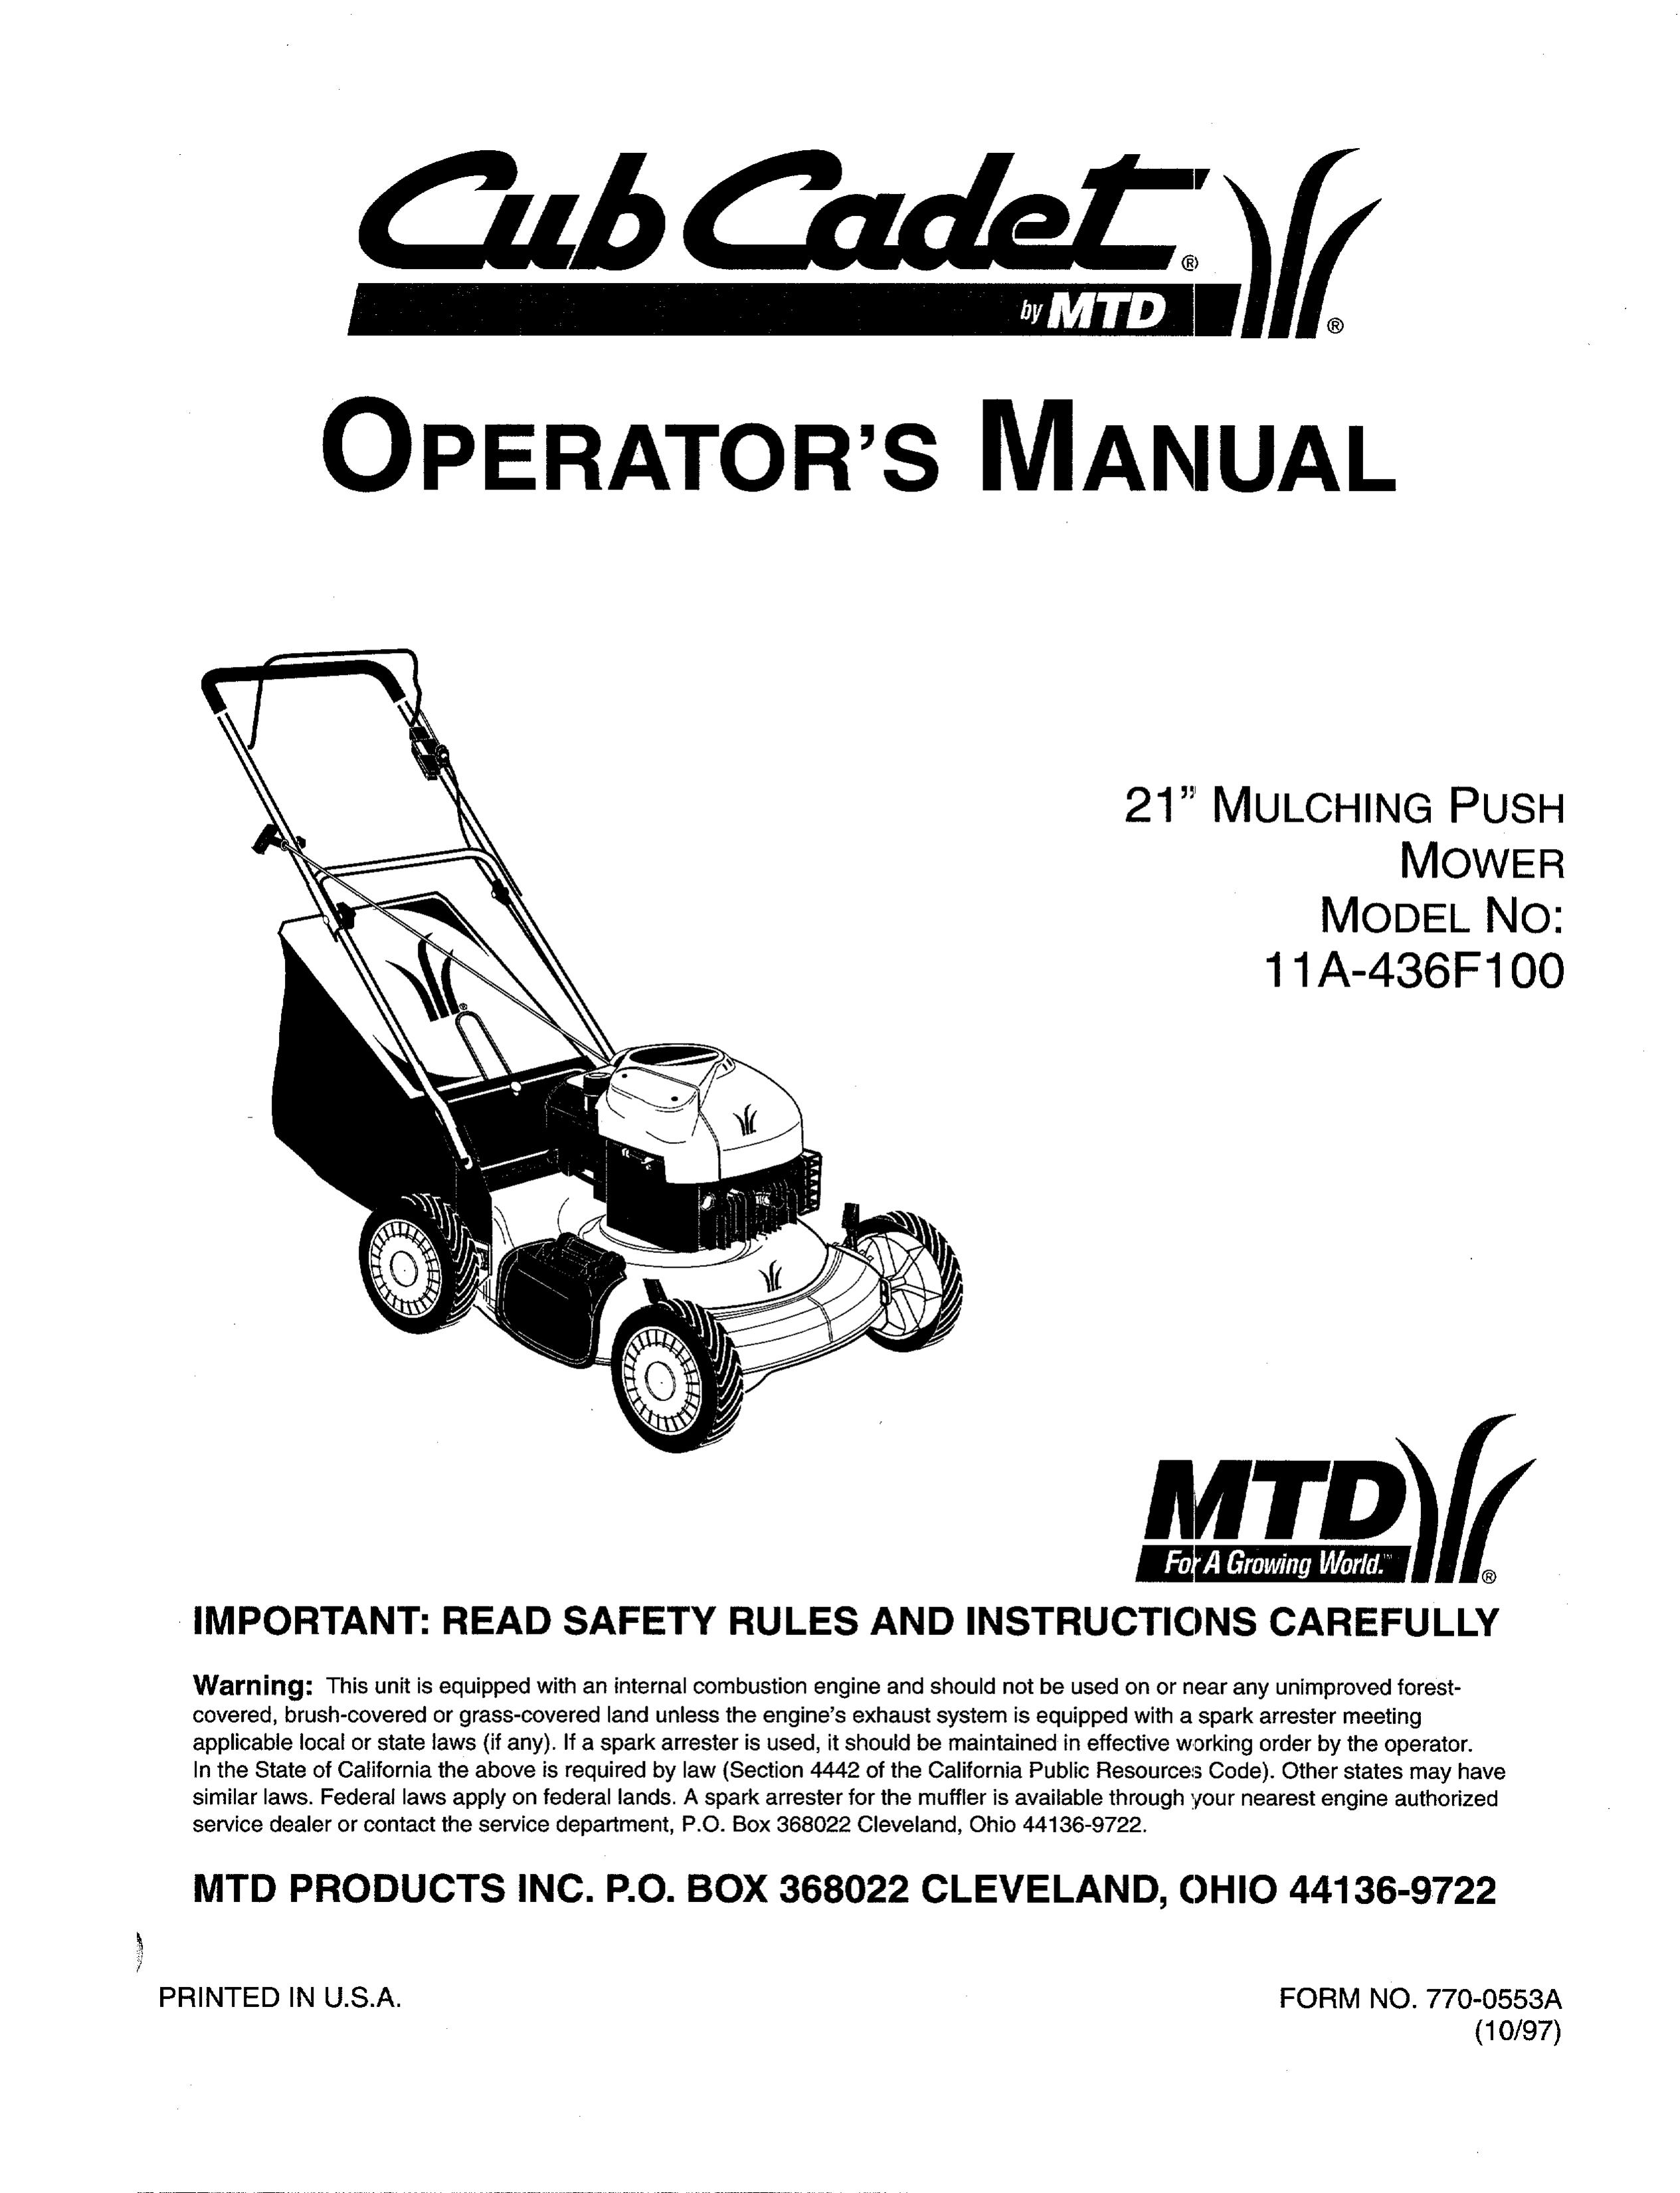 Cub Cadet 11A-436F100 Lawn Mower User Manual